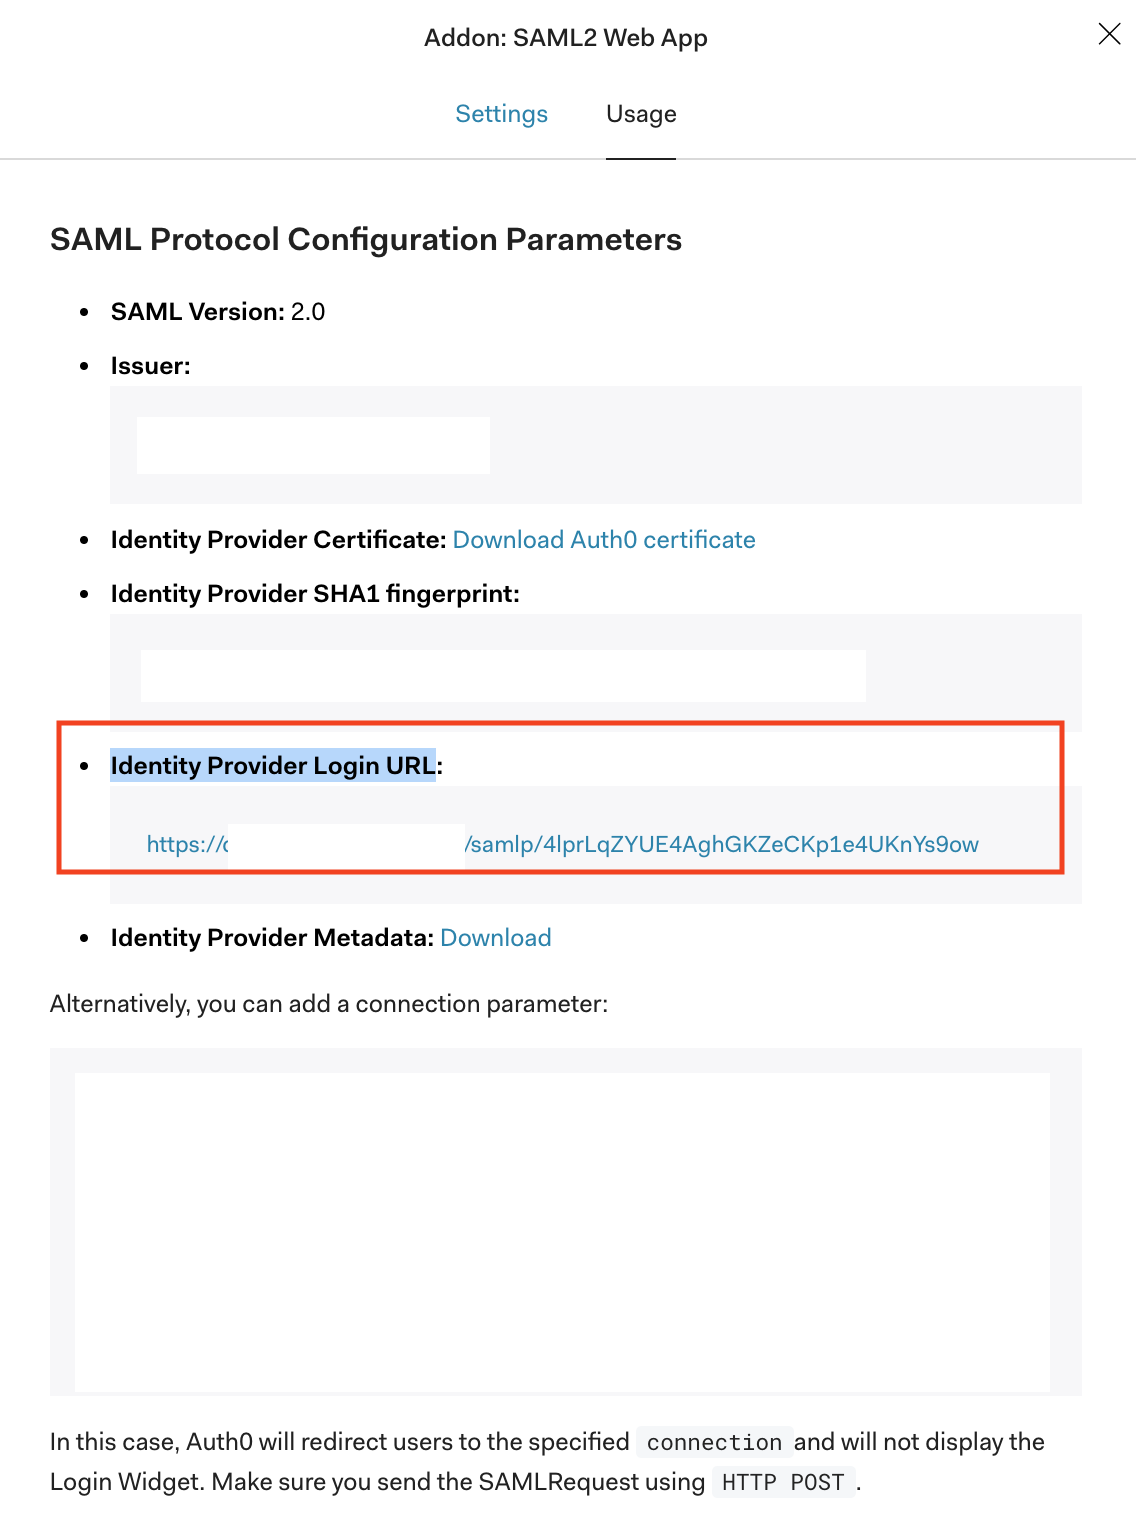 saml_configuration_confirmation.png